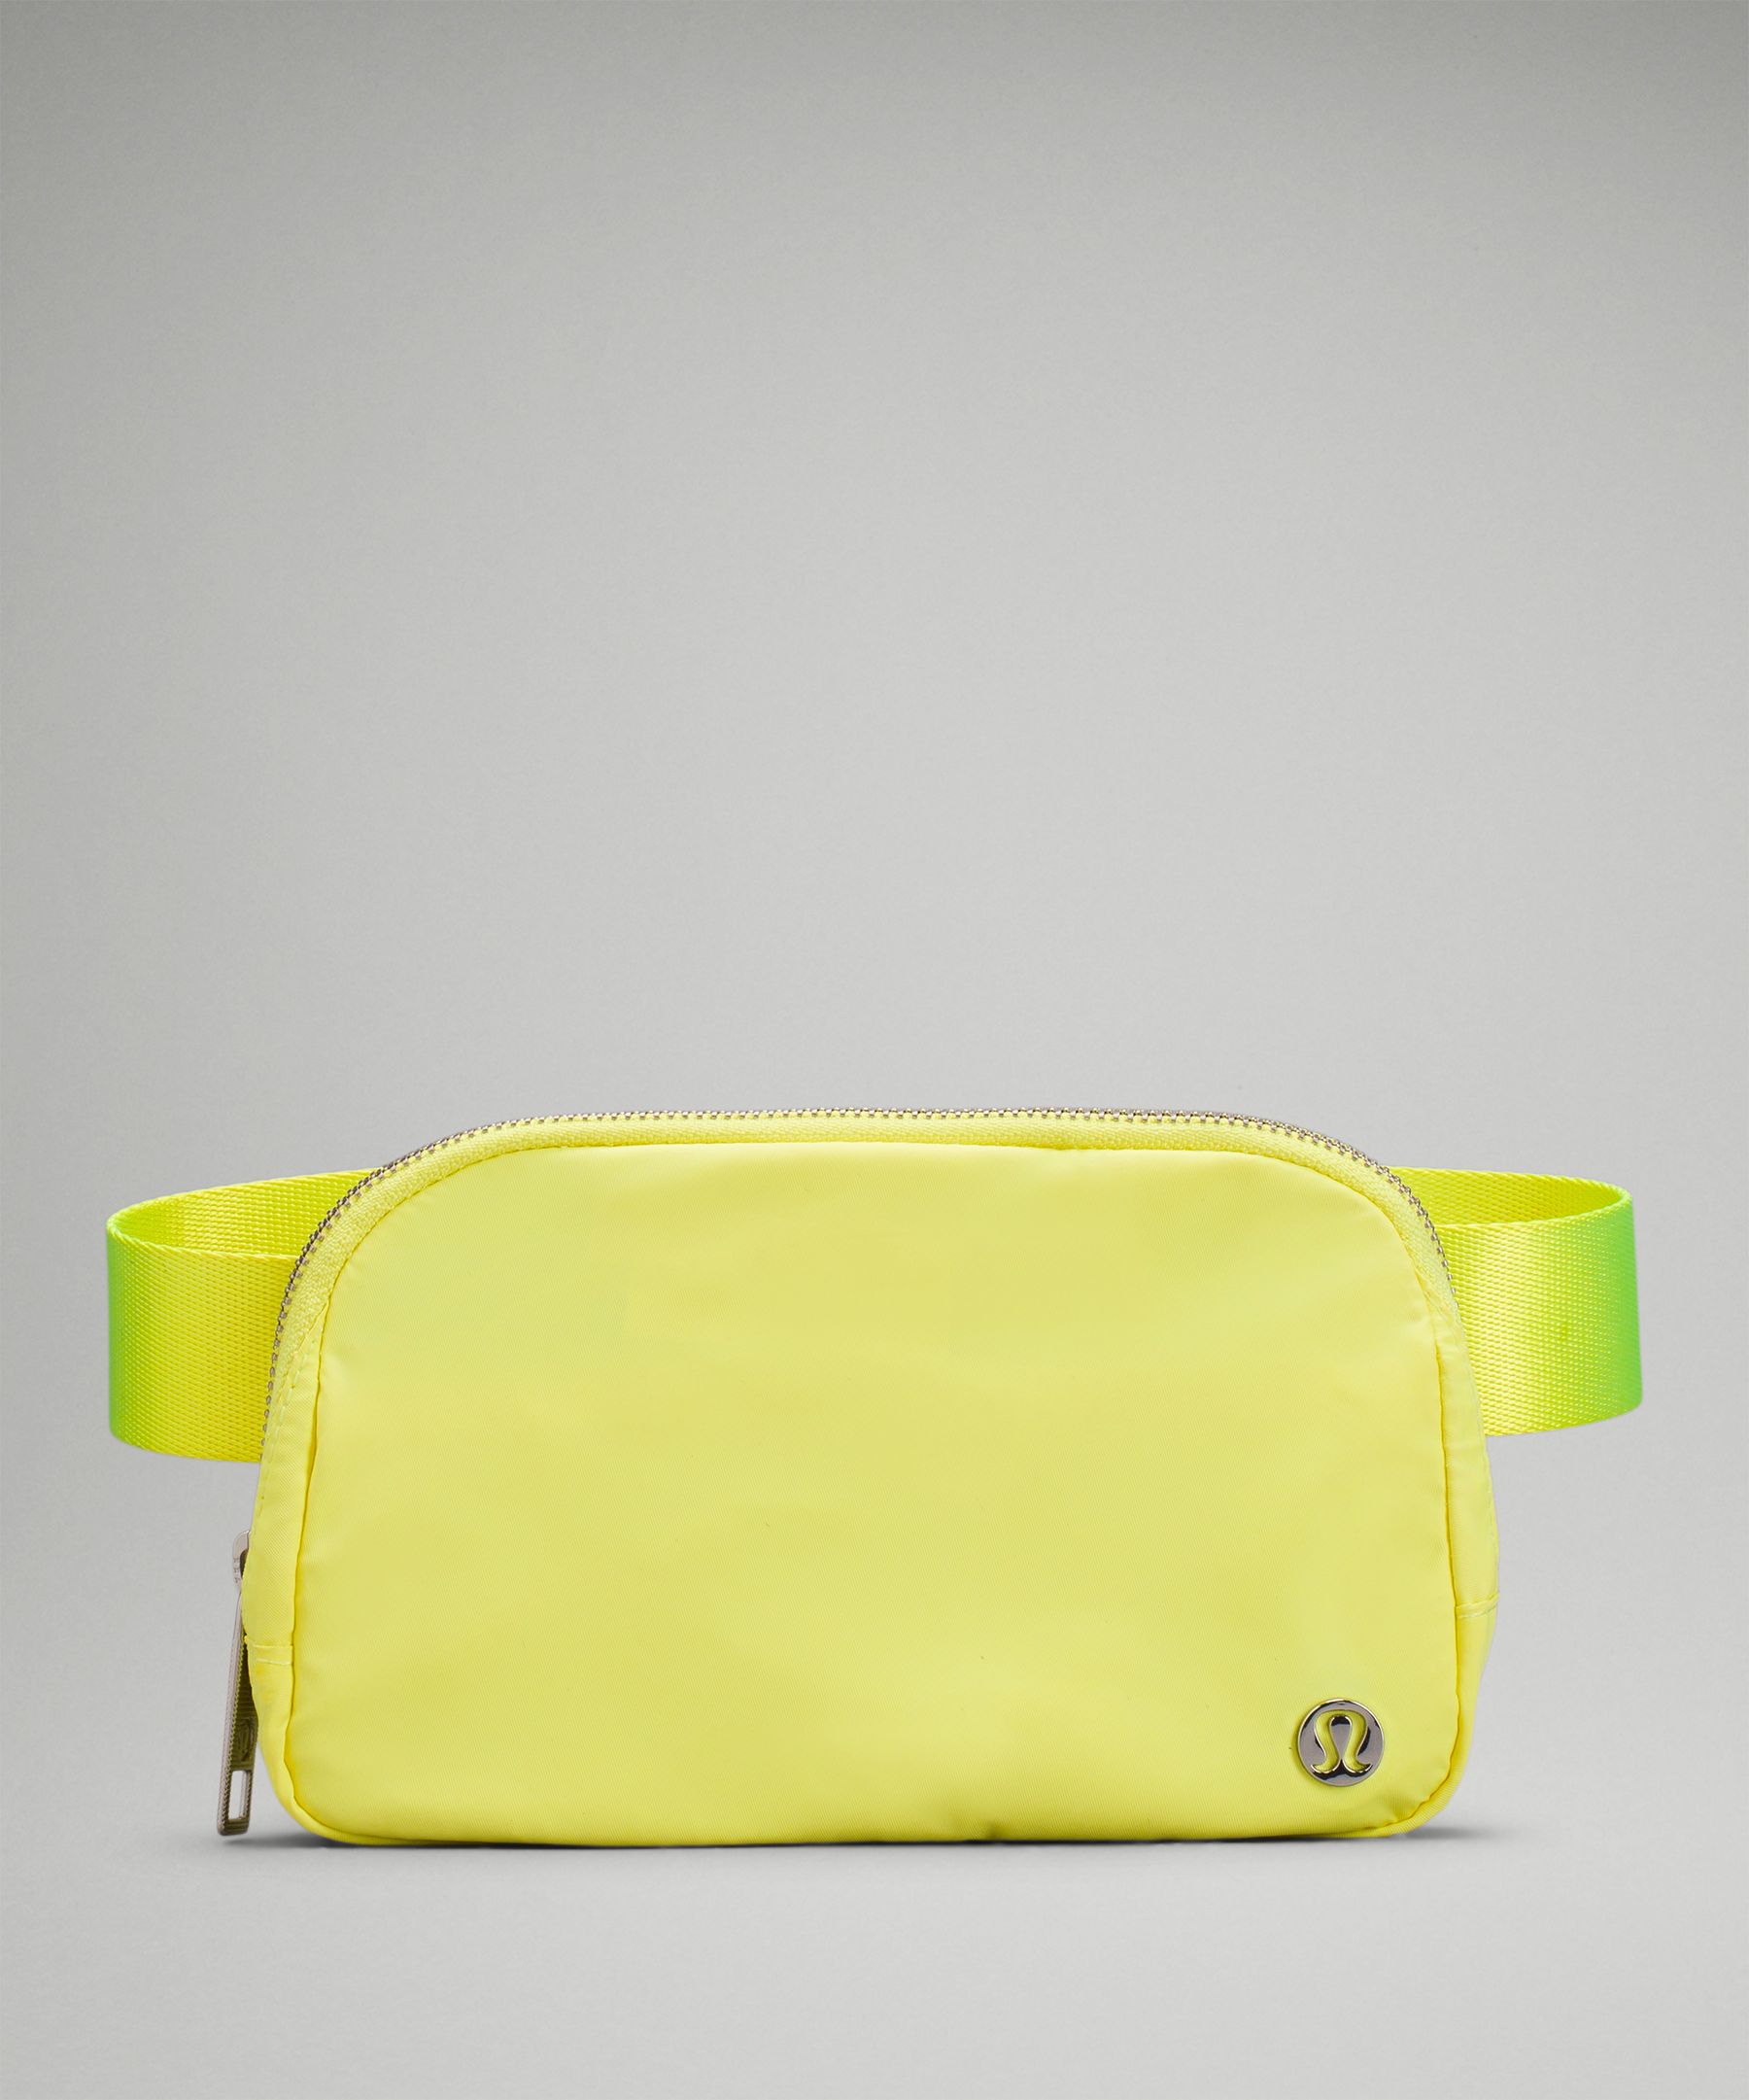 Lululemon Everywhere Belt Bag 1l In Electric Lemon